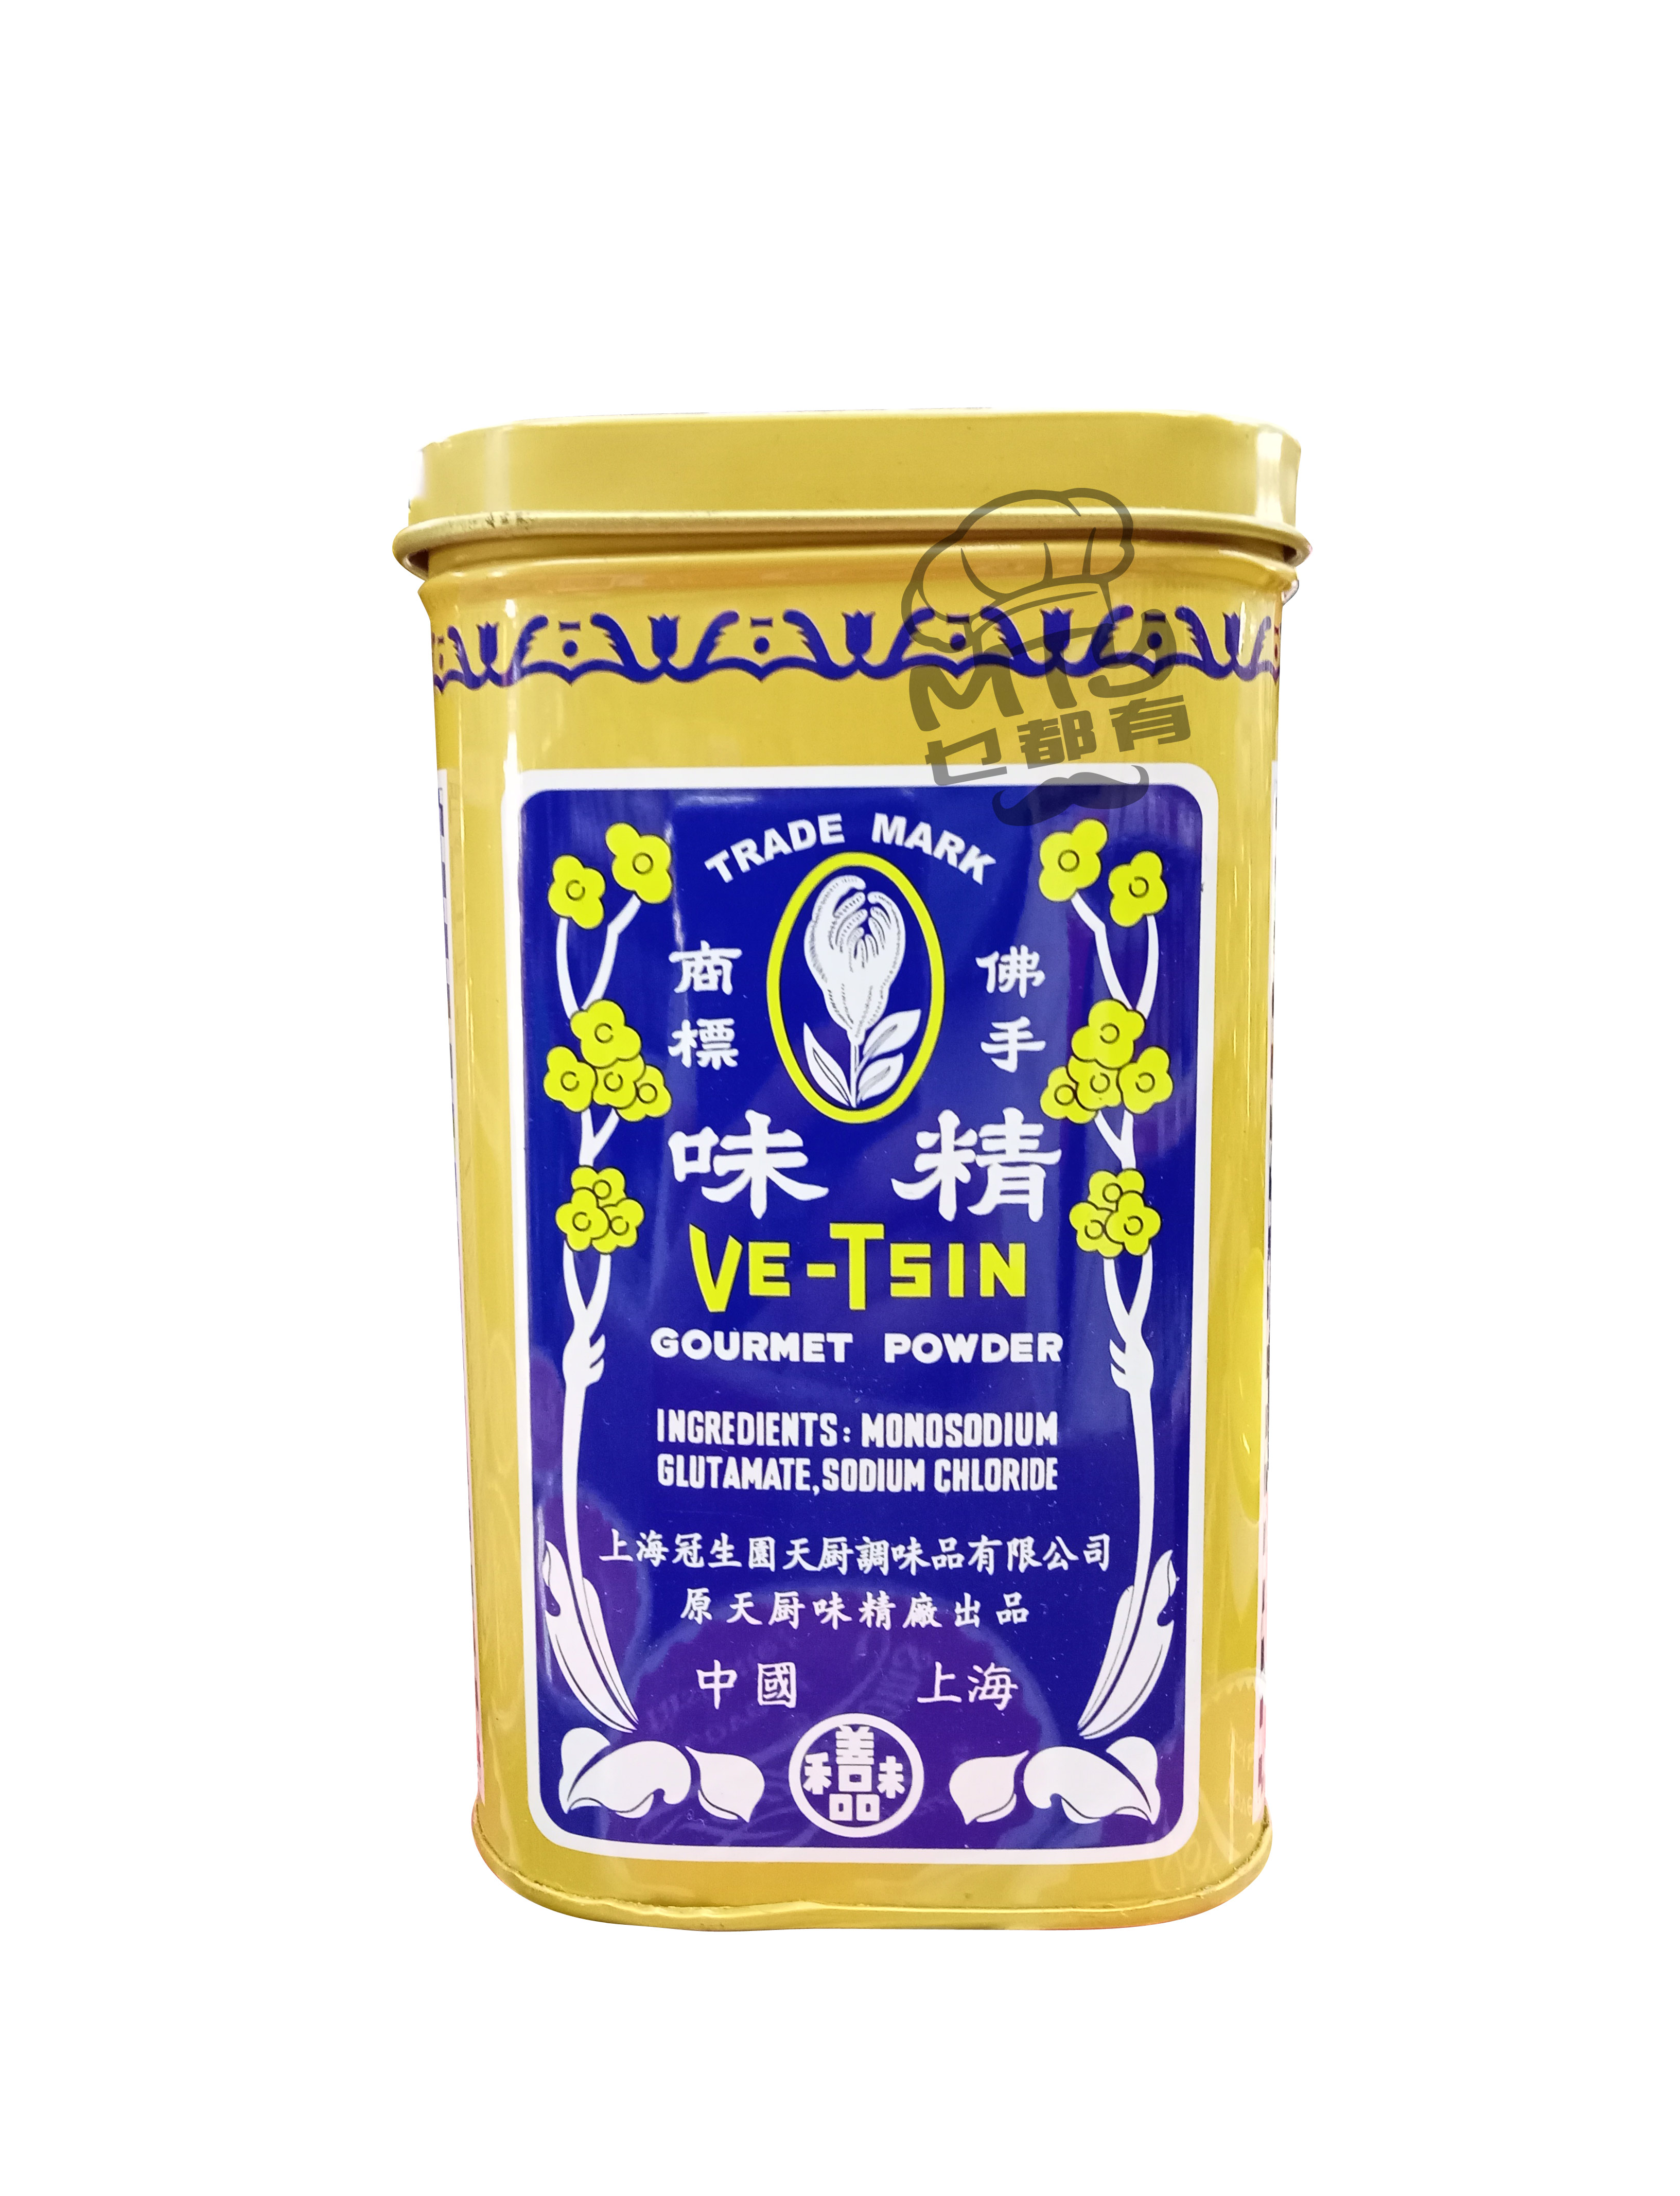 VE-TSIN Gourmet Powder 378g